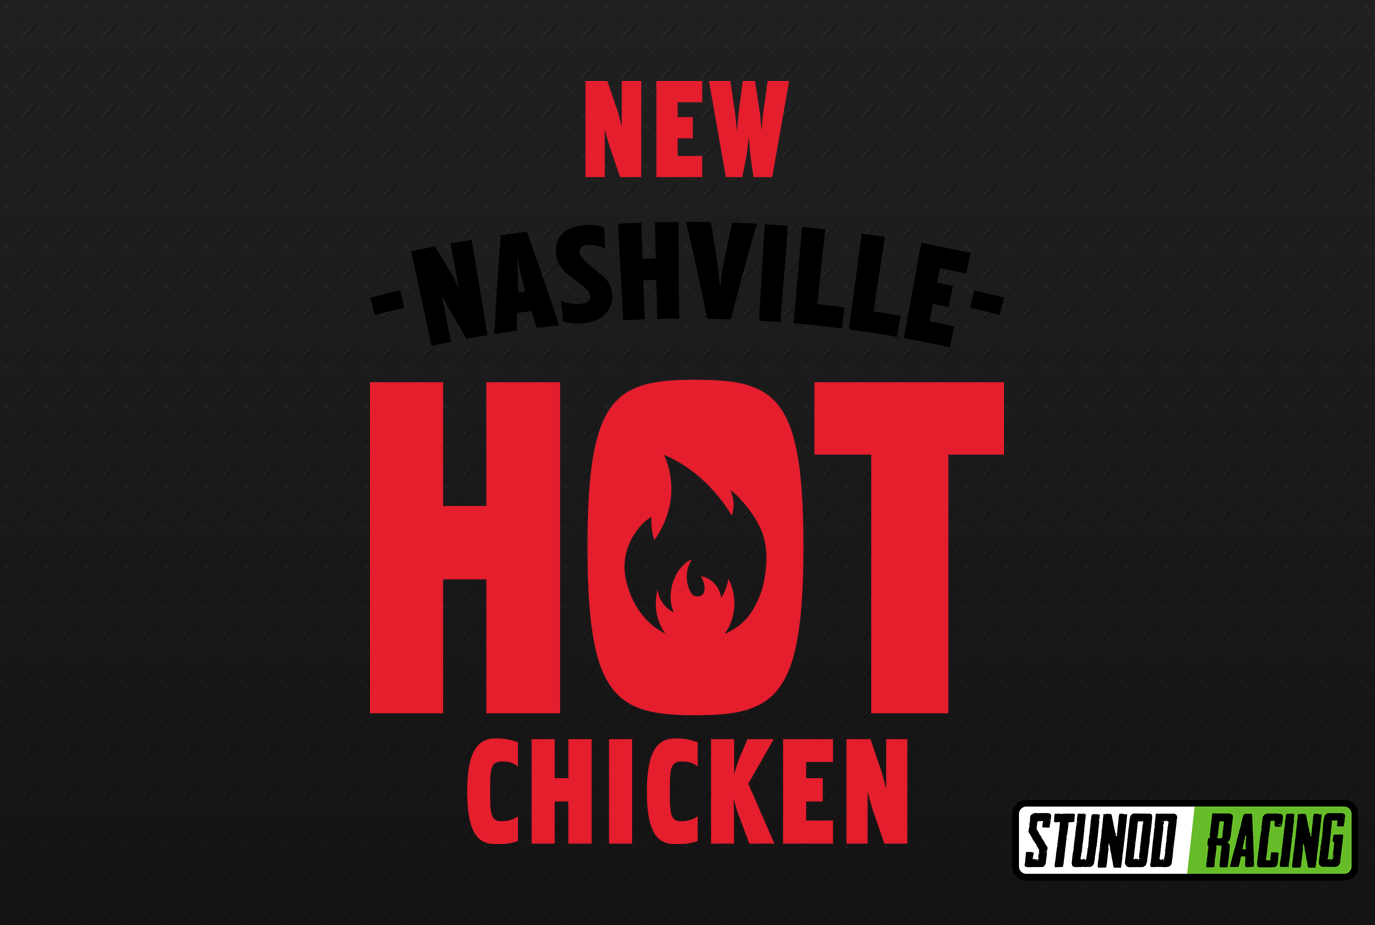 StunodRacing-KFC-Nashville_Hot-Chicken-Logo.jpg